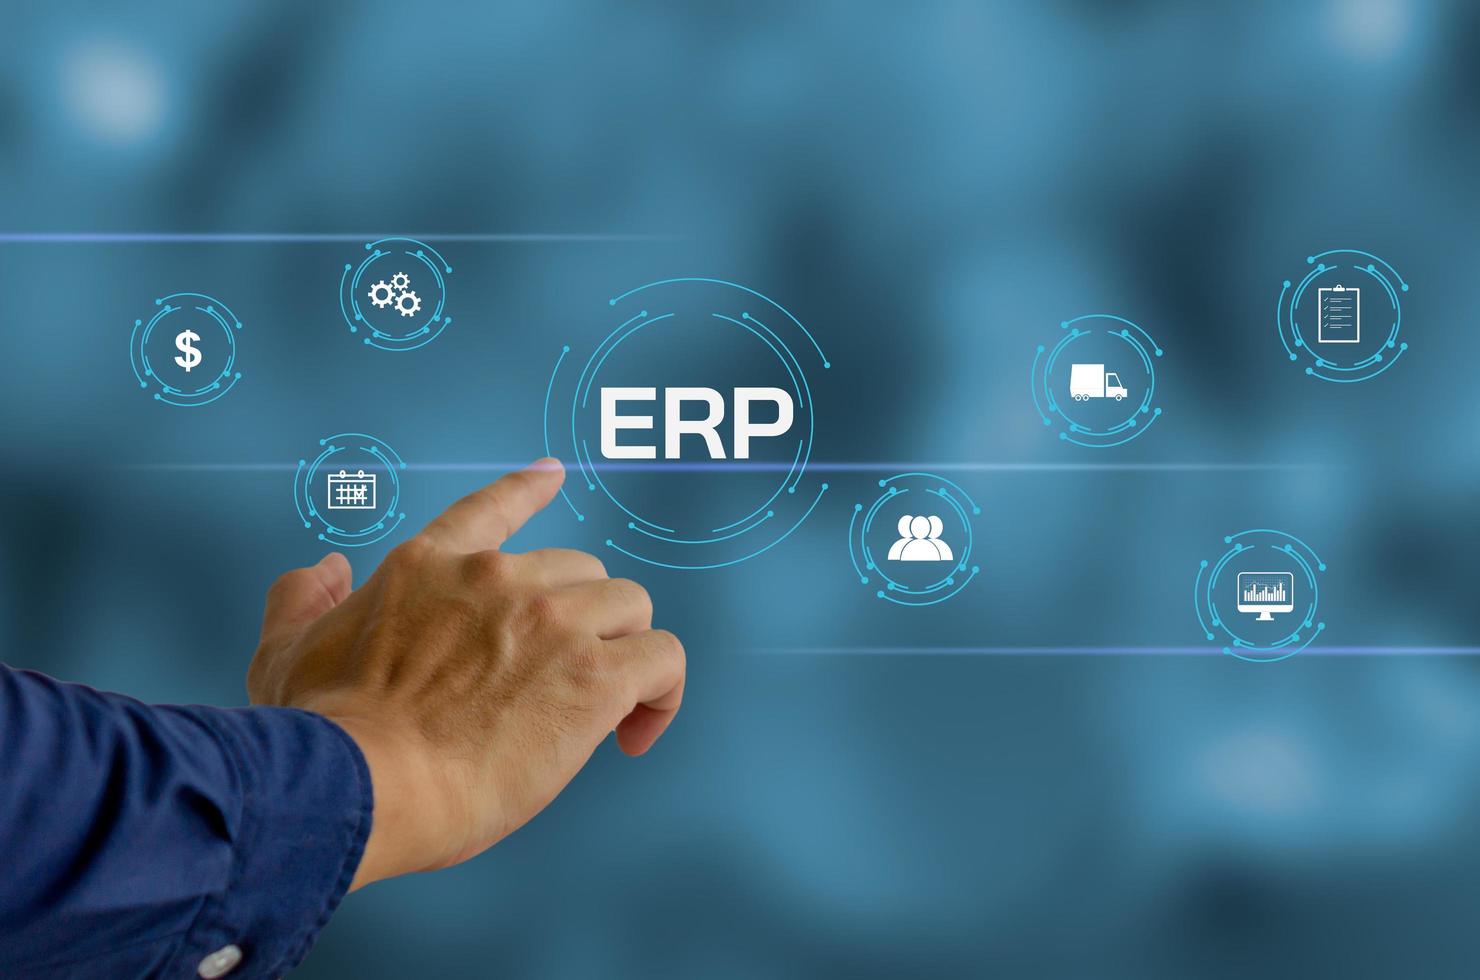 ERP Enterprise Resource Planning photo